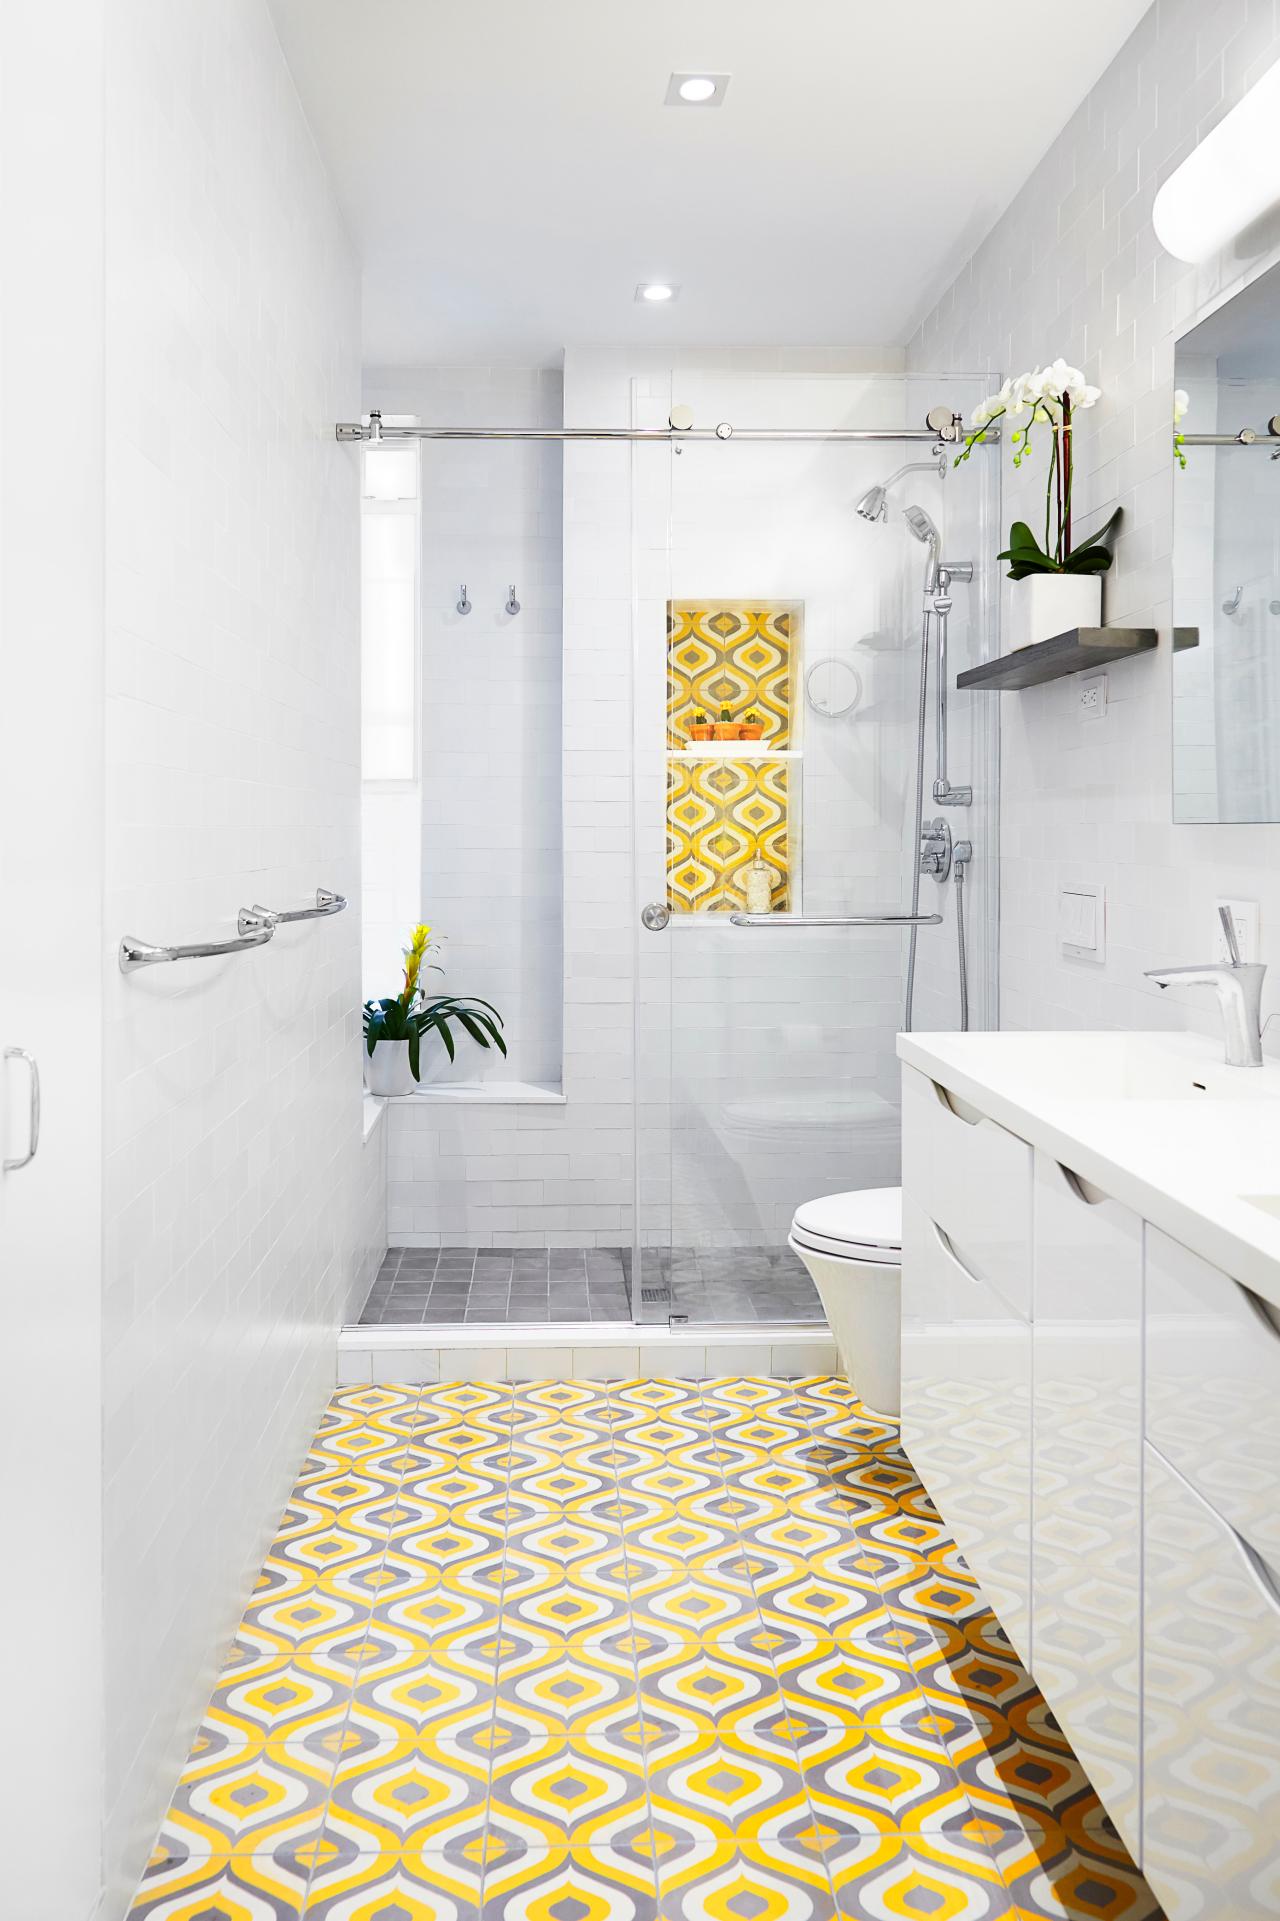 Top 20 Bathroom Tile Trends of 2017 | HGTV's Decorating ...